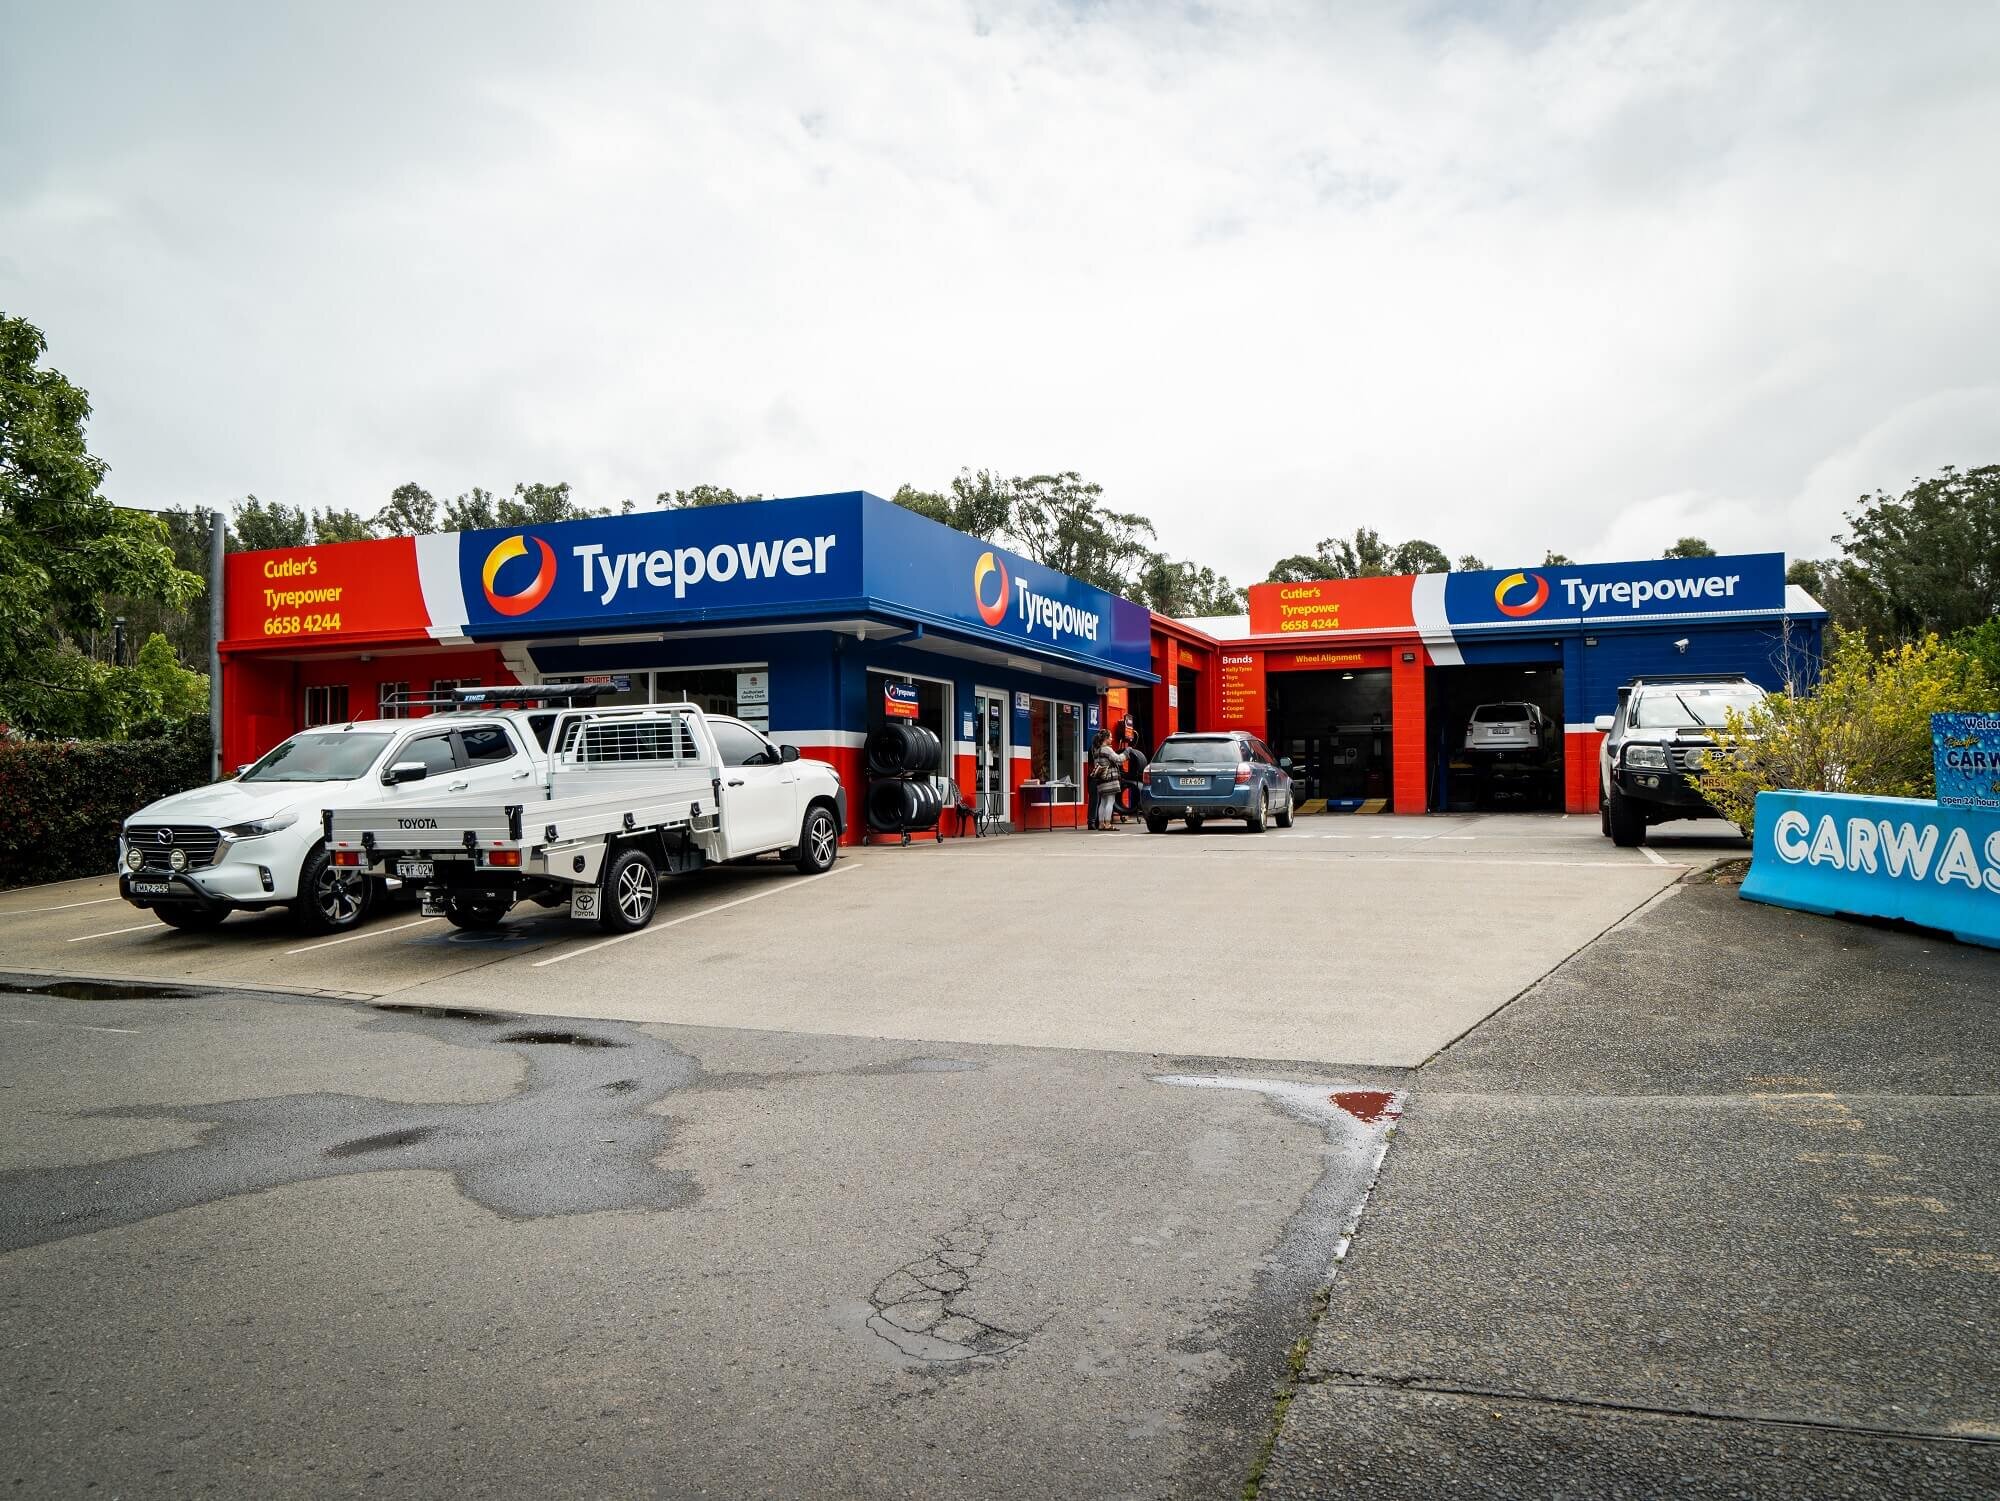 Exterior of Tyrepower store.